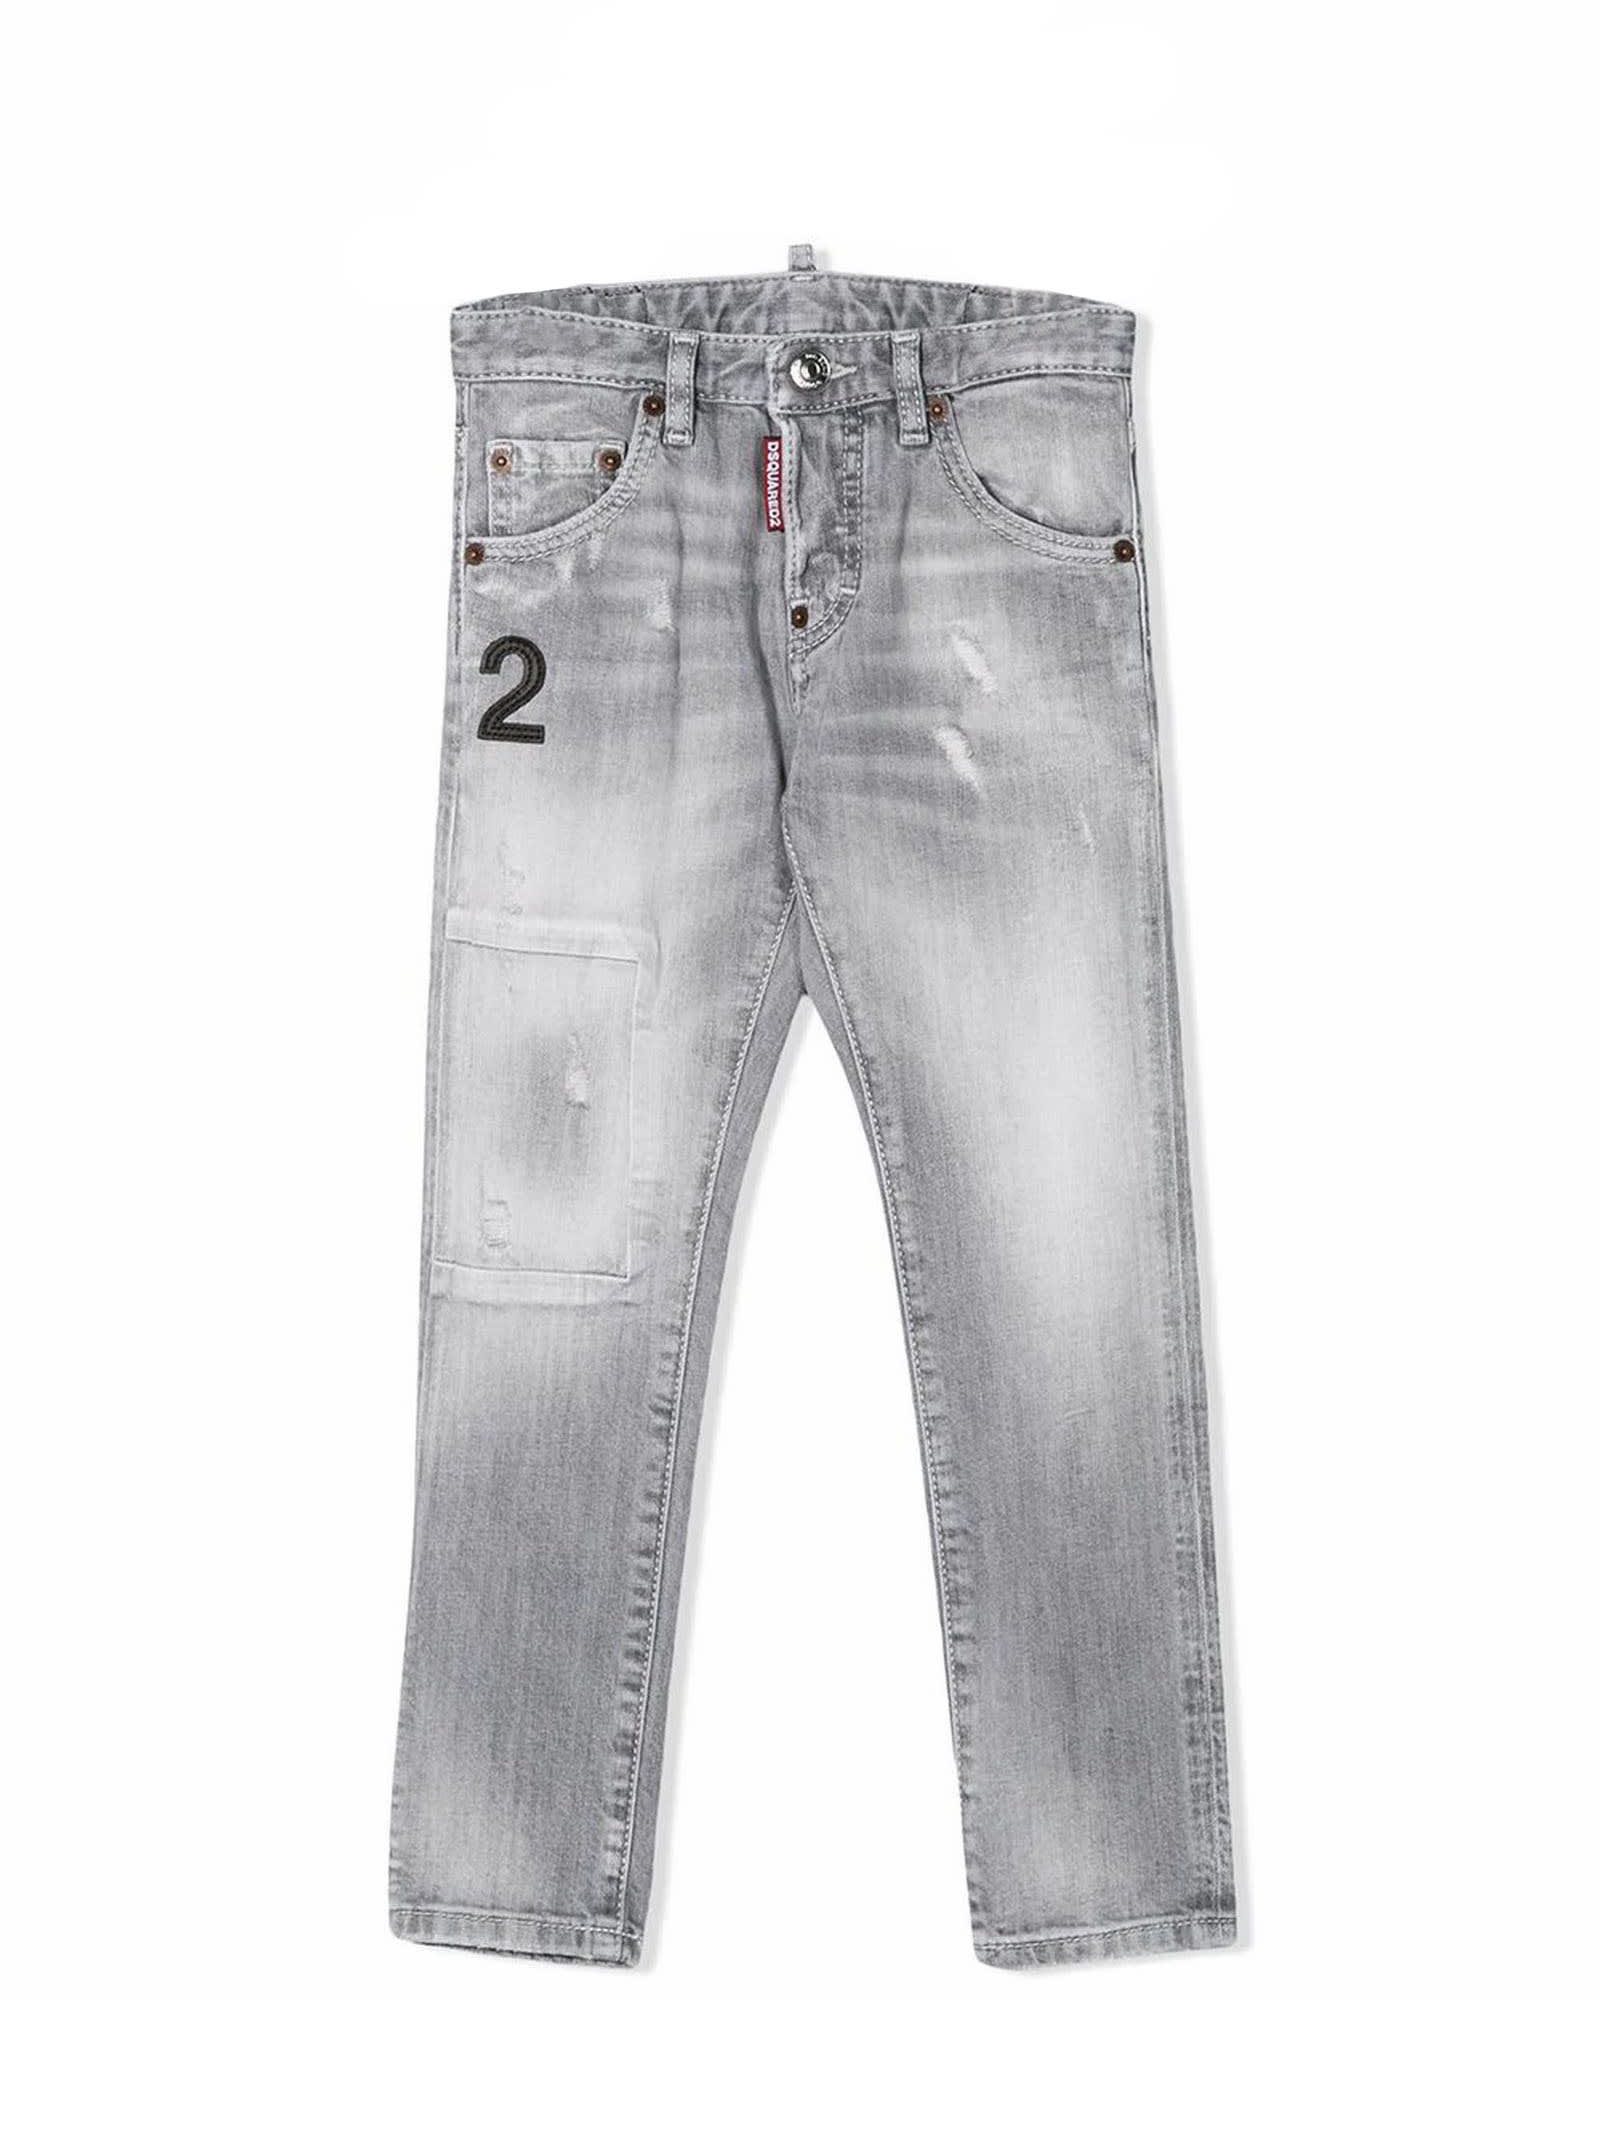 Dsquared2 Grey Cotton 2 Patch Jeans